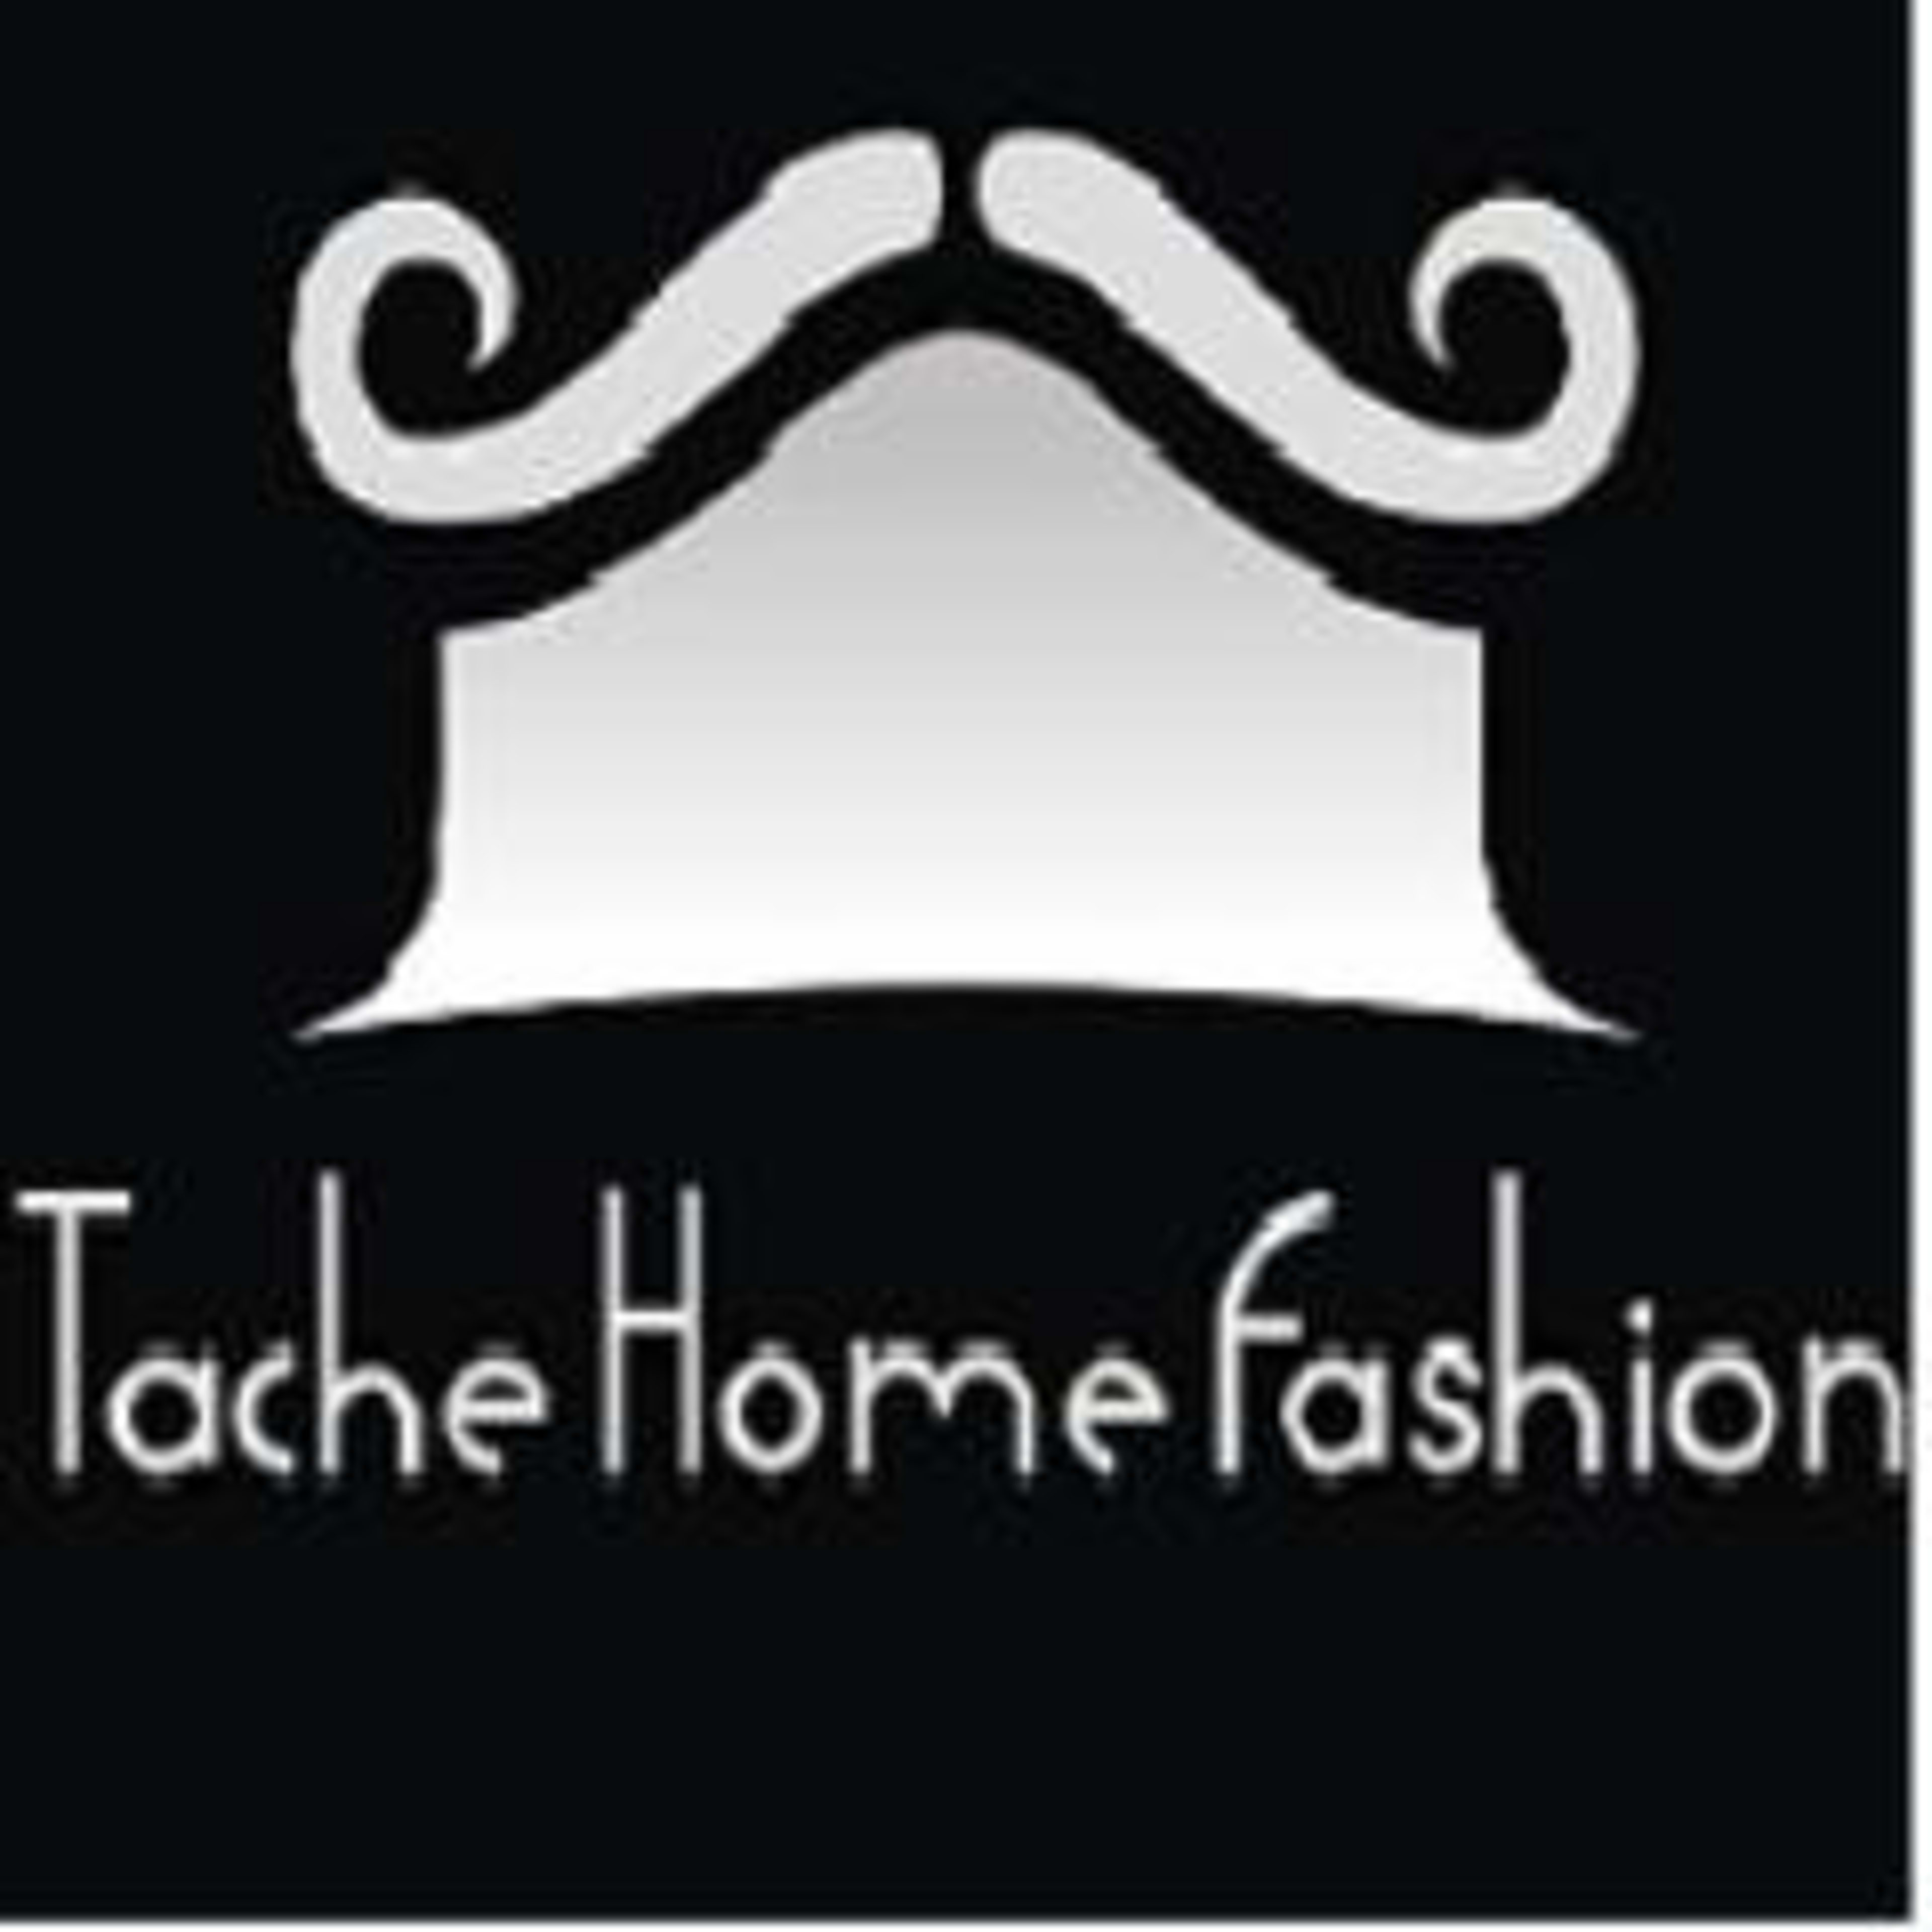 Tache Home Fashion Code